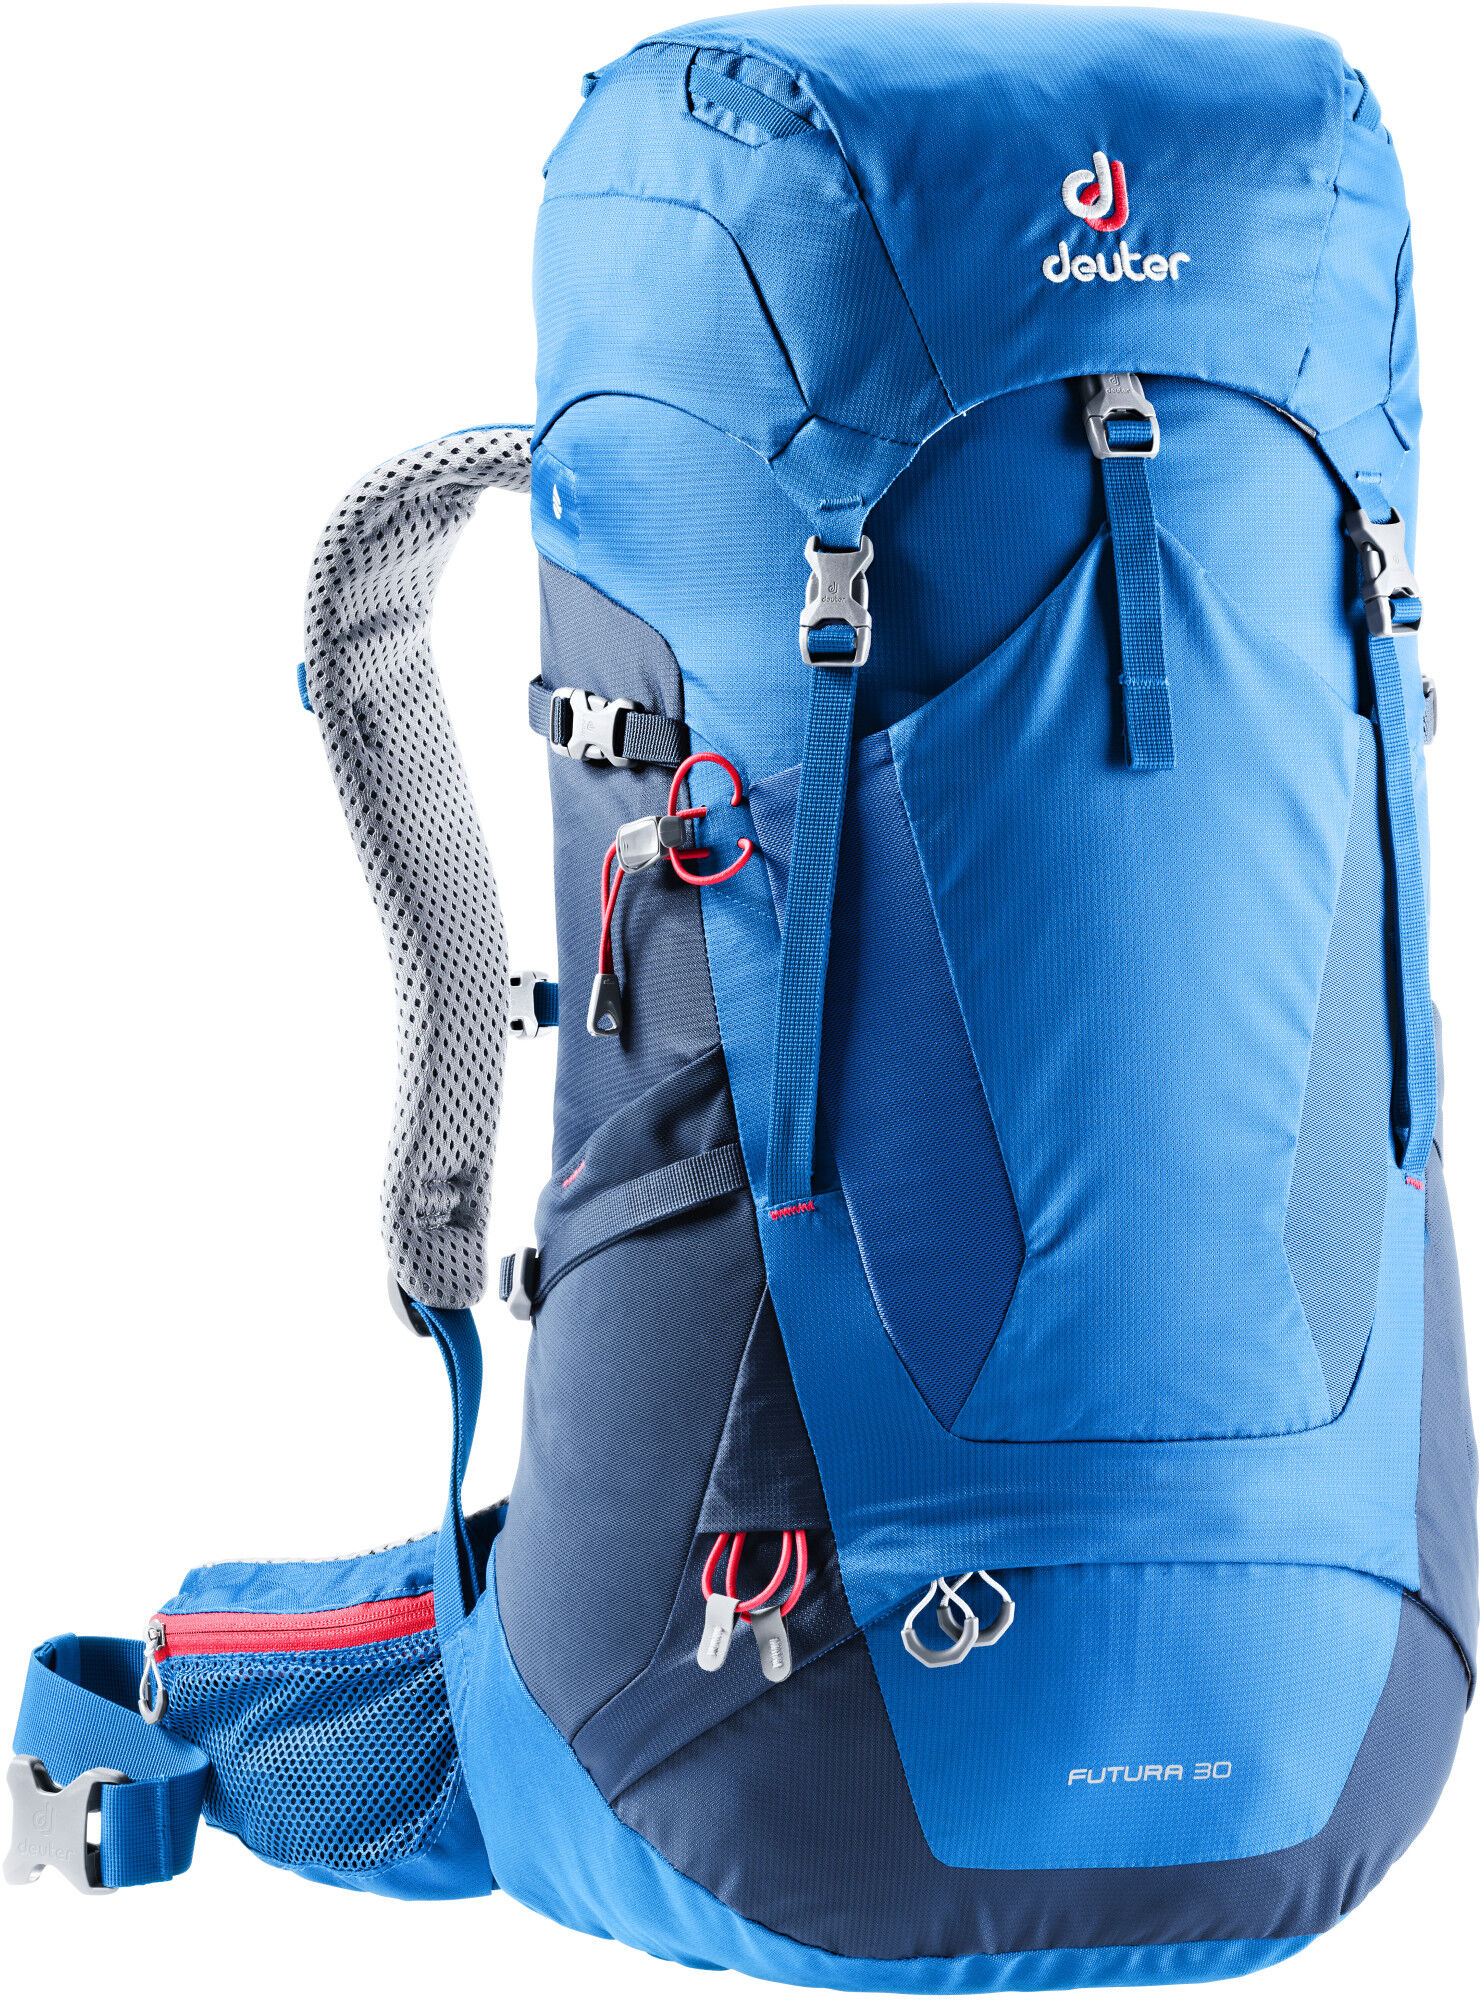 Deuter - Futura 30 - Hiking backpack